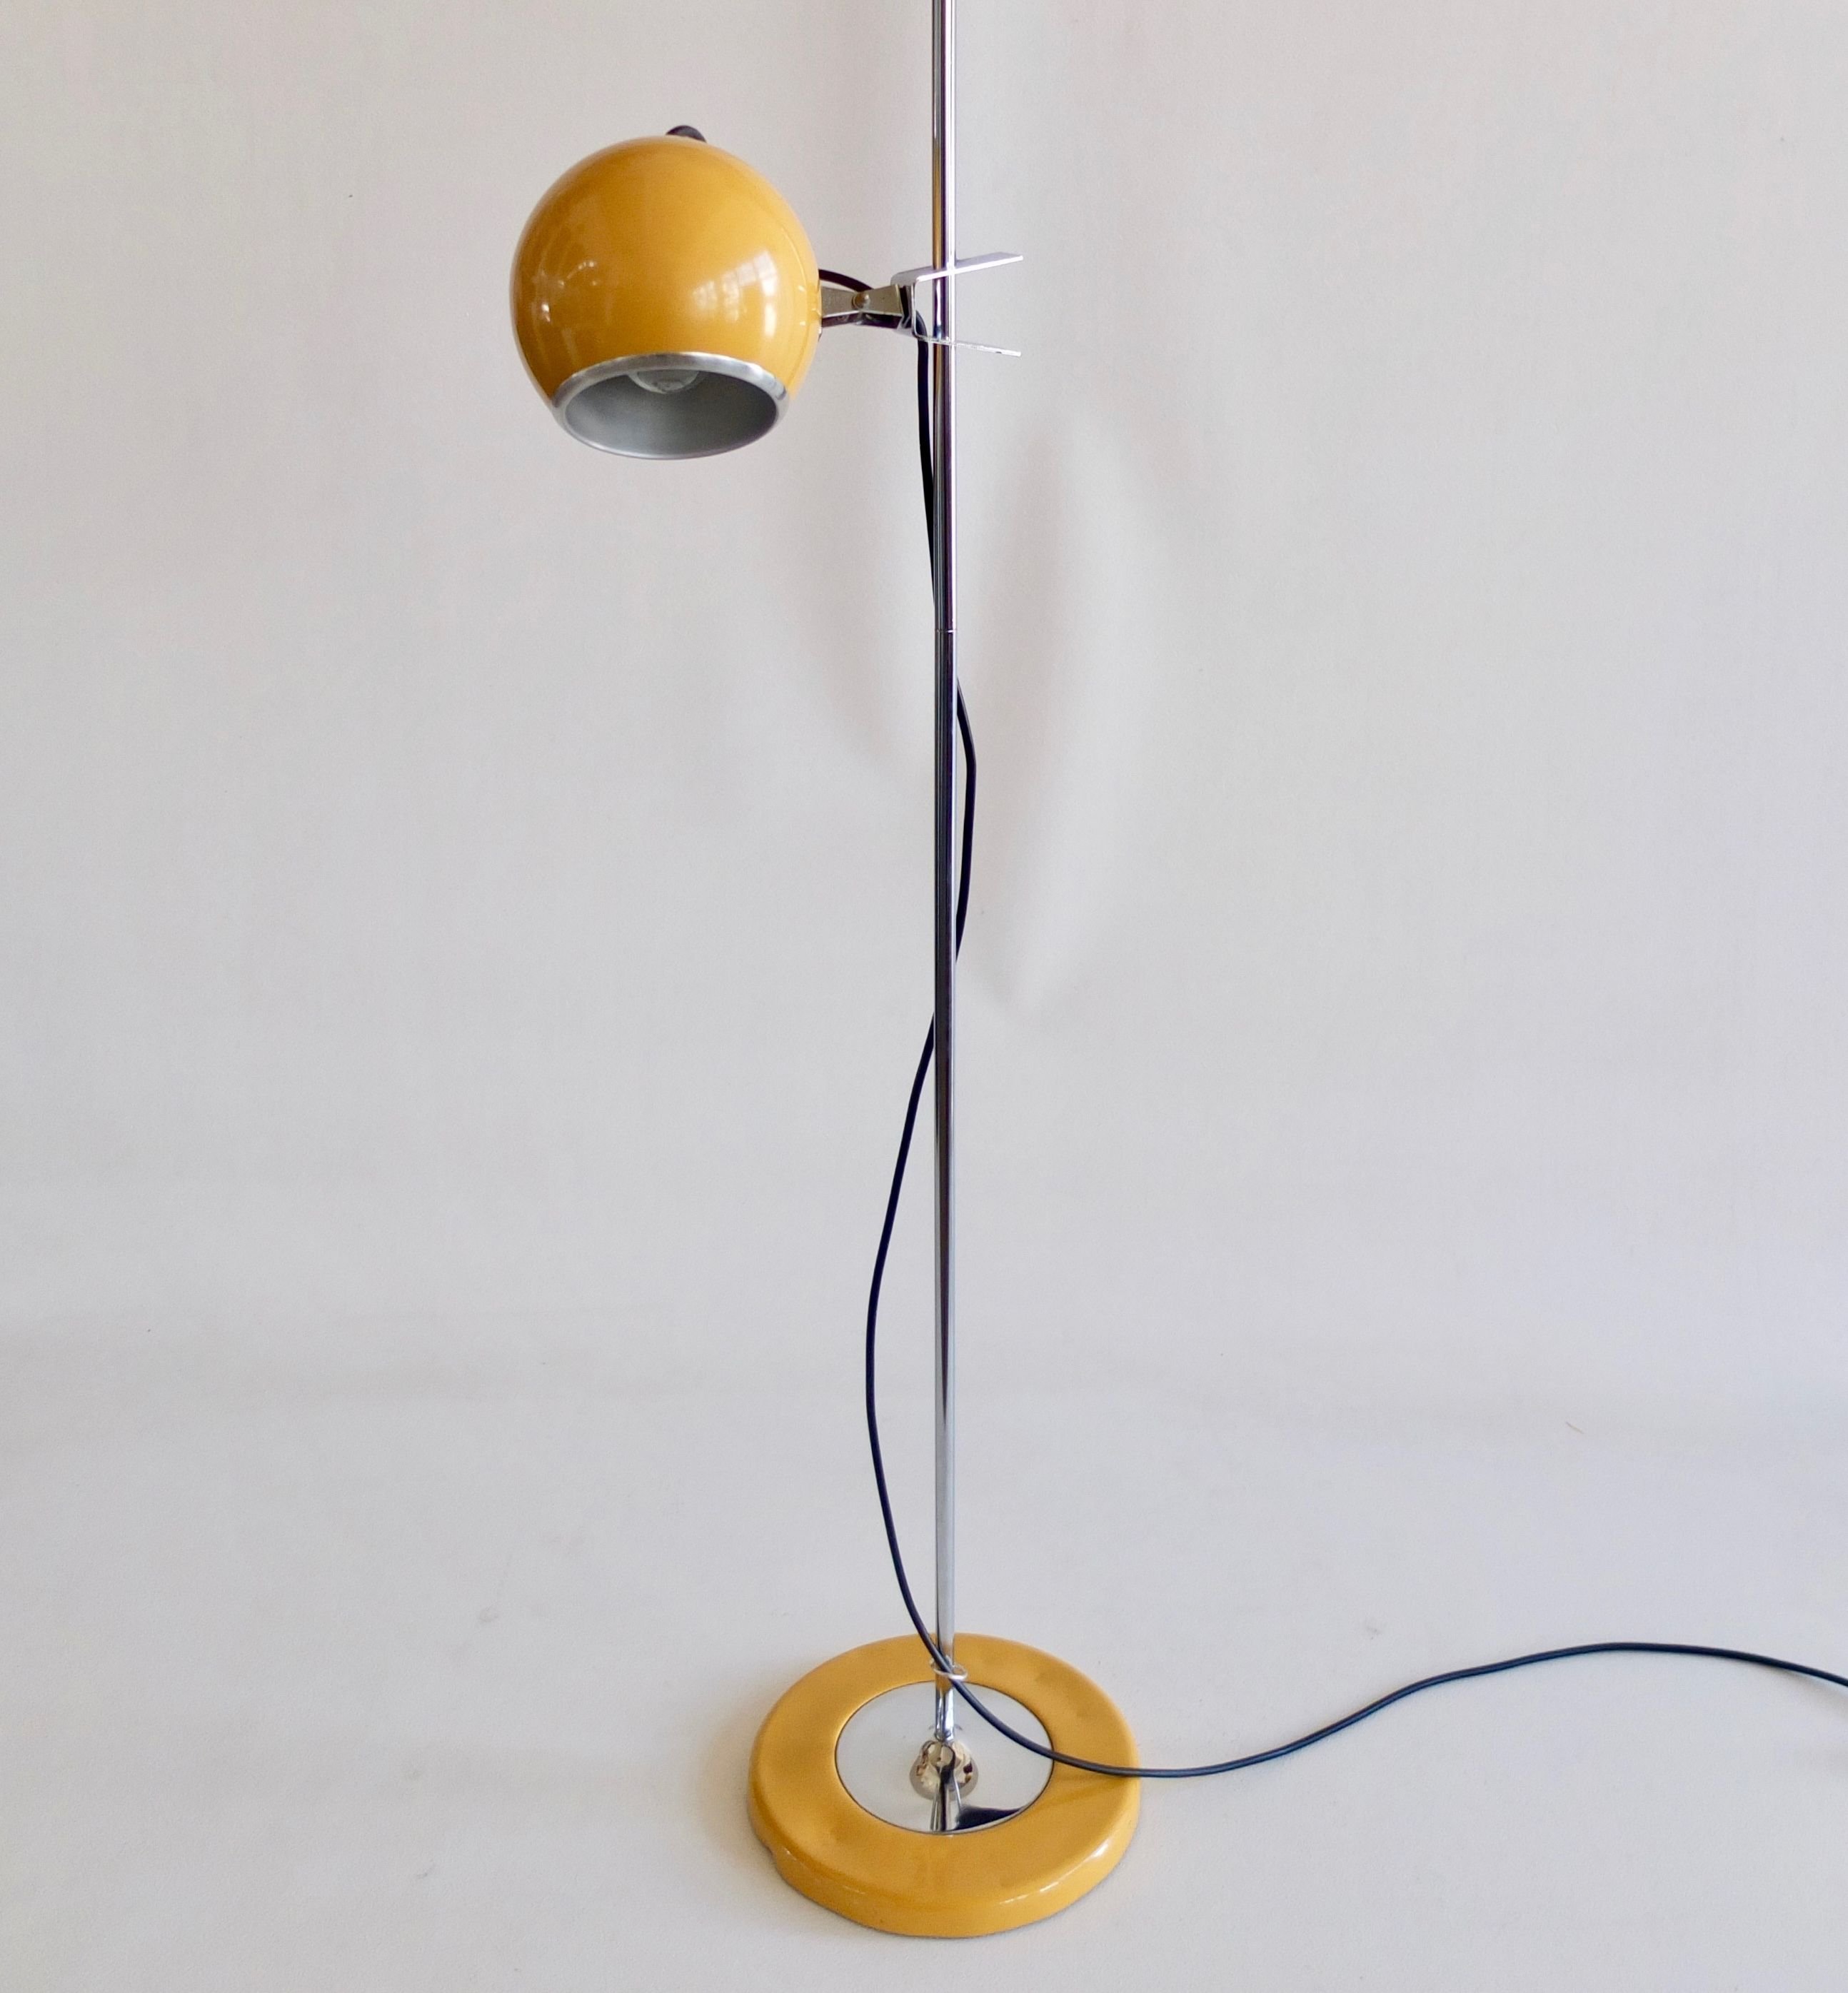 Vintage yellow "eyeball" floor lamp by Targetti Sankey - 1970s - Design